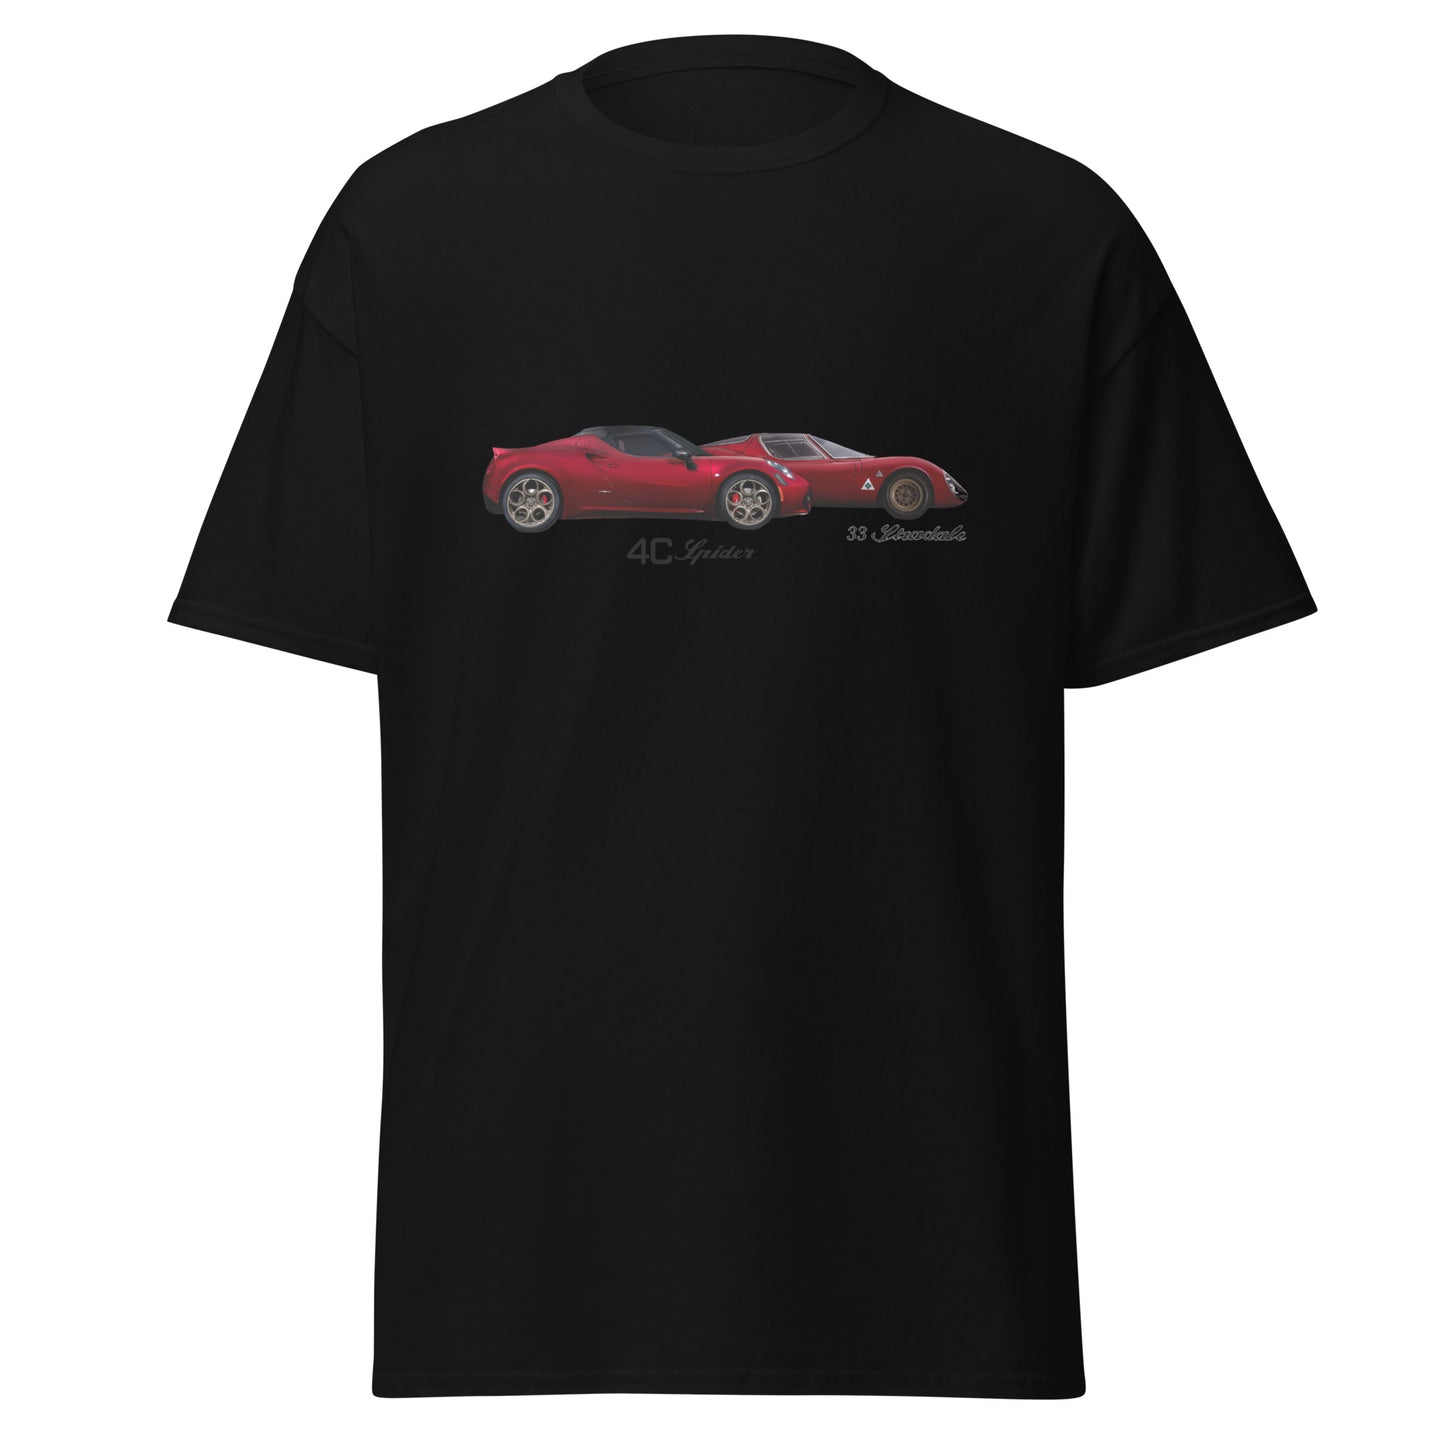 T-shirt Alfa Romeo 4c spider tributo Alfa 33 stradale